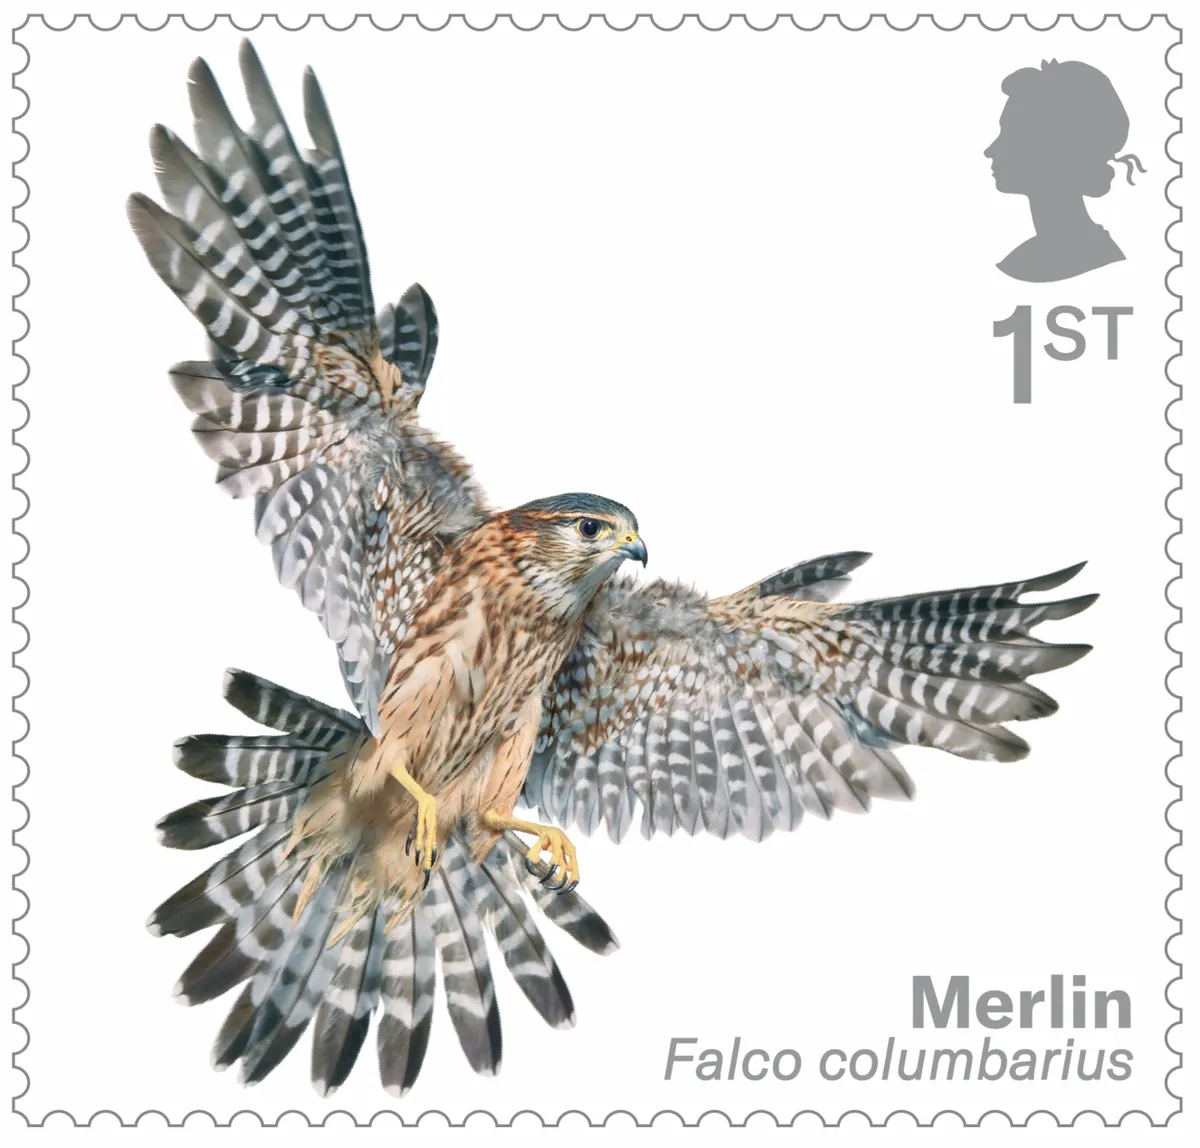 Bird of prey stamp collection - merlin. © Tim Flach/Royal Mail.